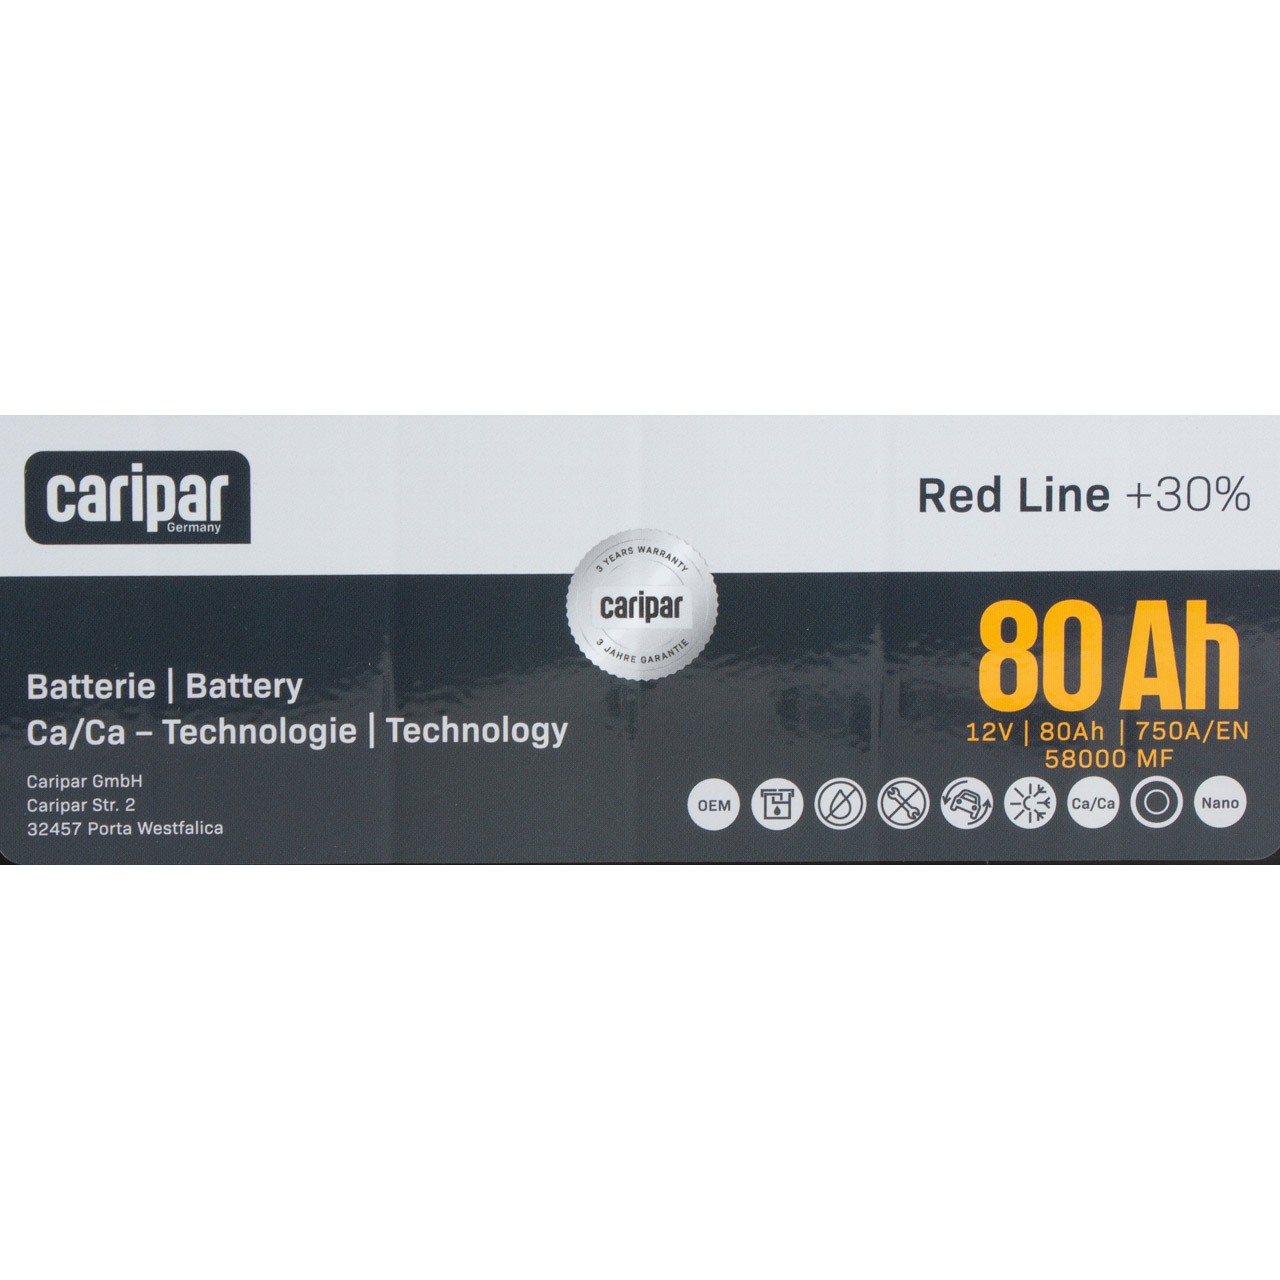 CARIPAR RED LINE +30% PKW KFZ Autobatterie Starterbatterie 12V 80Ah 750A/EN B13